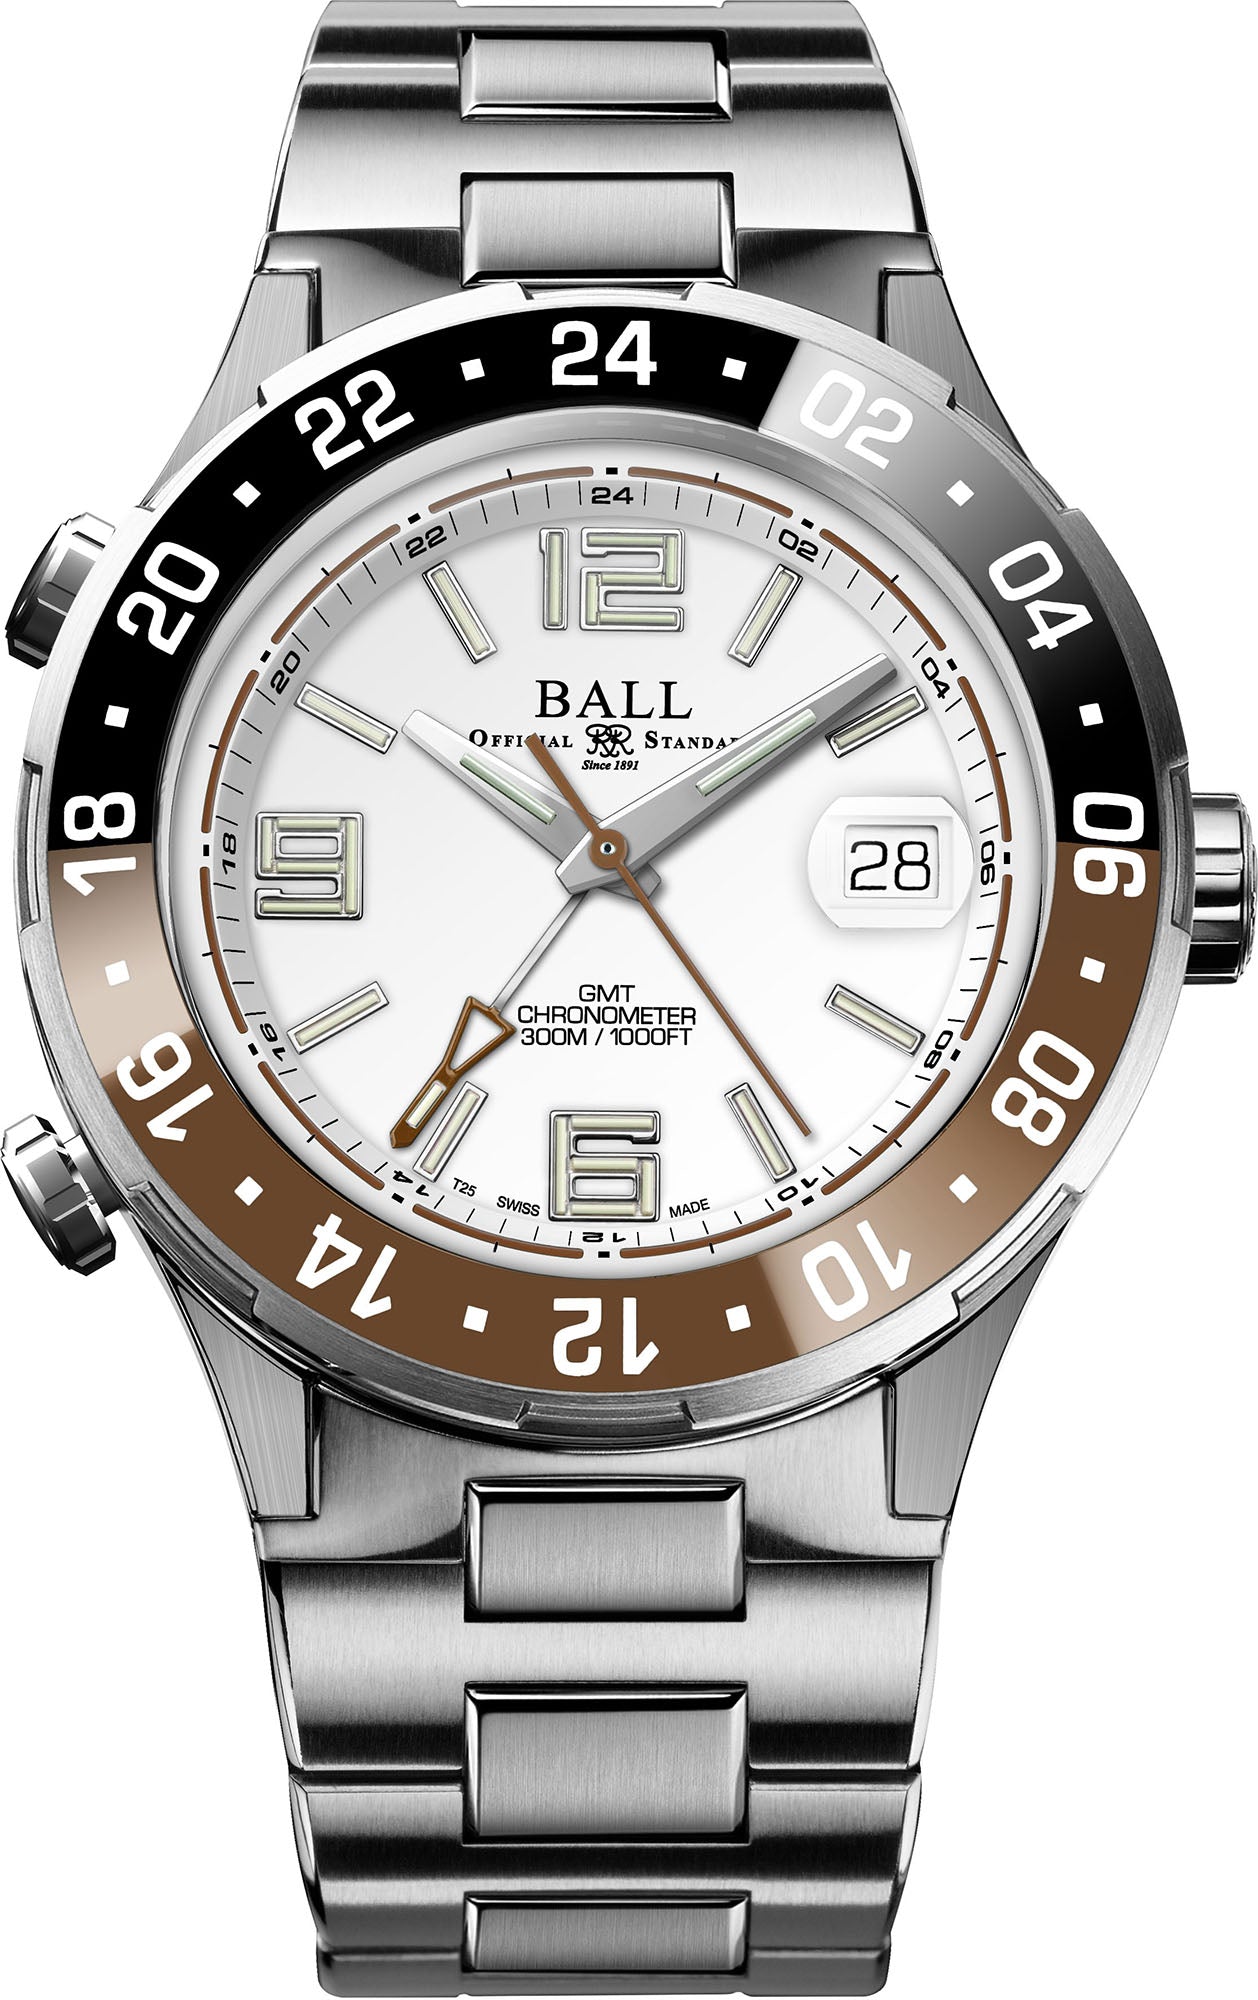 Photos - Wrist Watch Ball Watch Company Roadmaster Pilot GMT Limited Edition BL-2512 